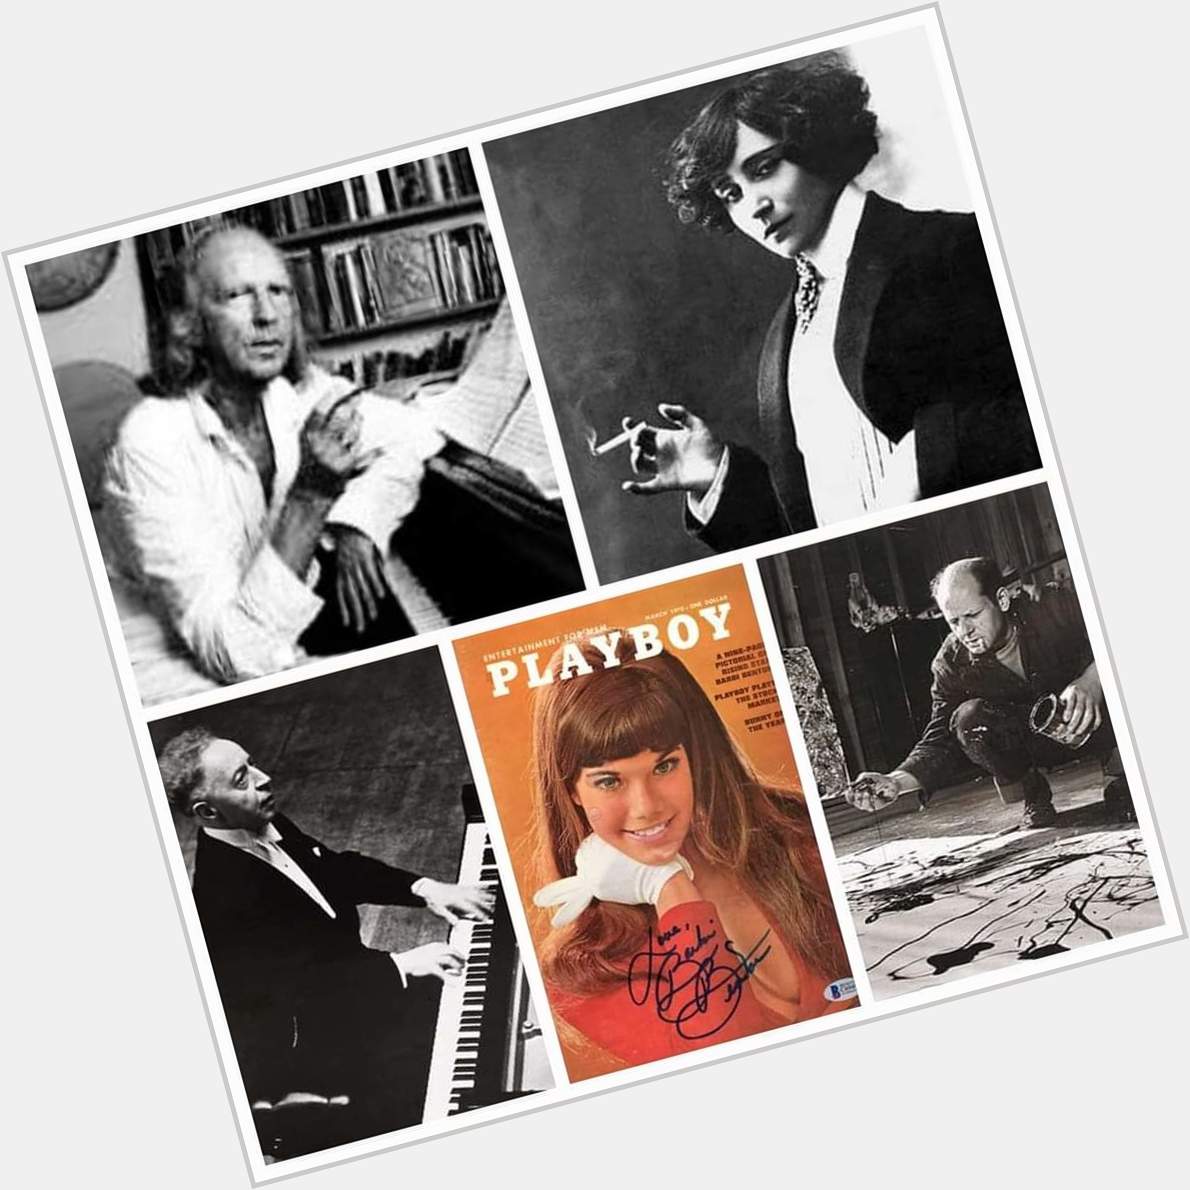 January 28th 

Happy Birthday to John Tavener, Collette, Artur Rubinstein, Barbi Benton, and Jackson Pollock! 